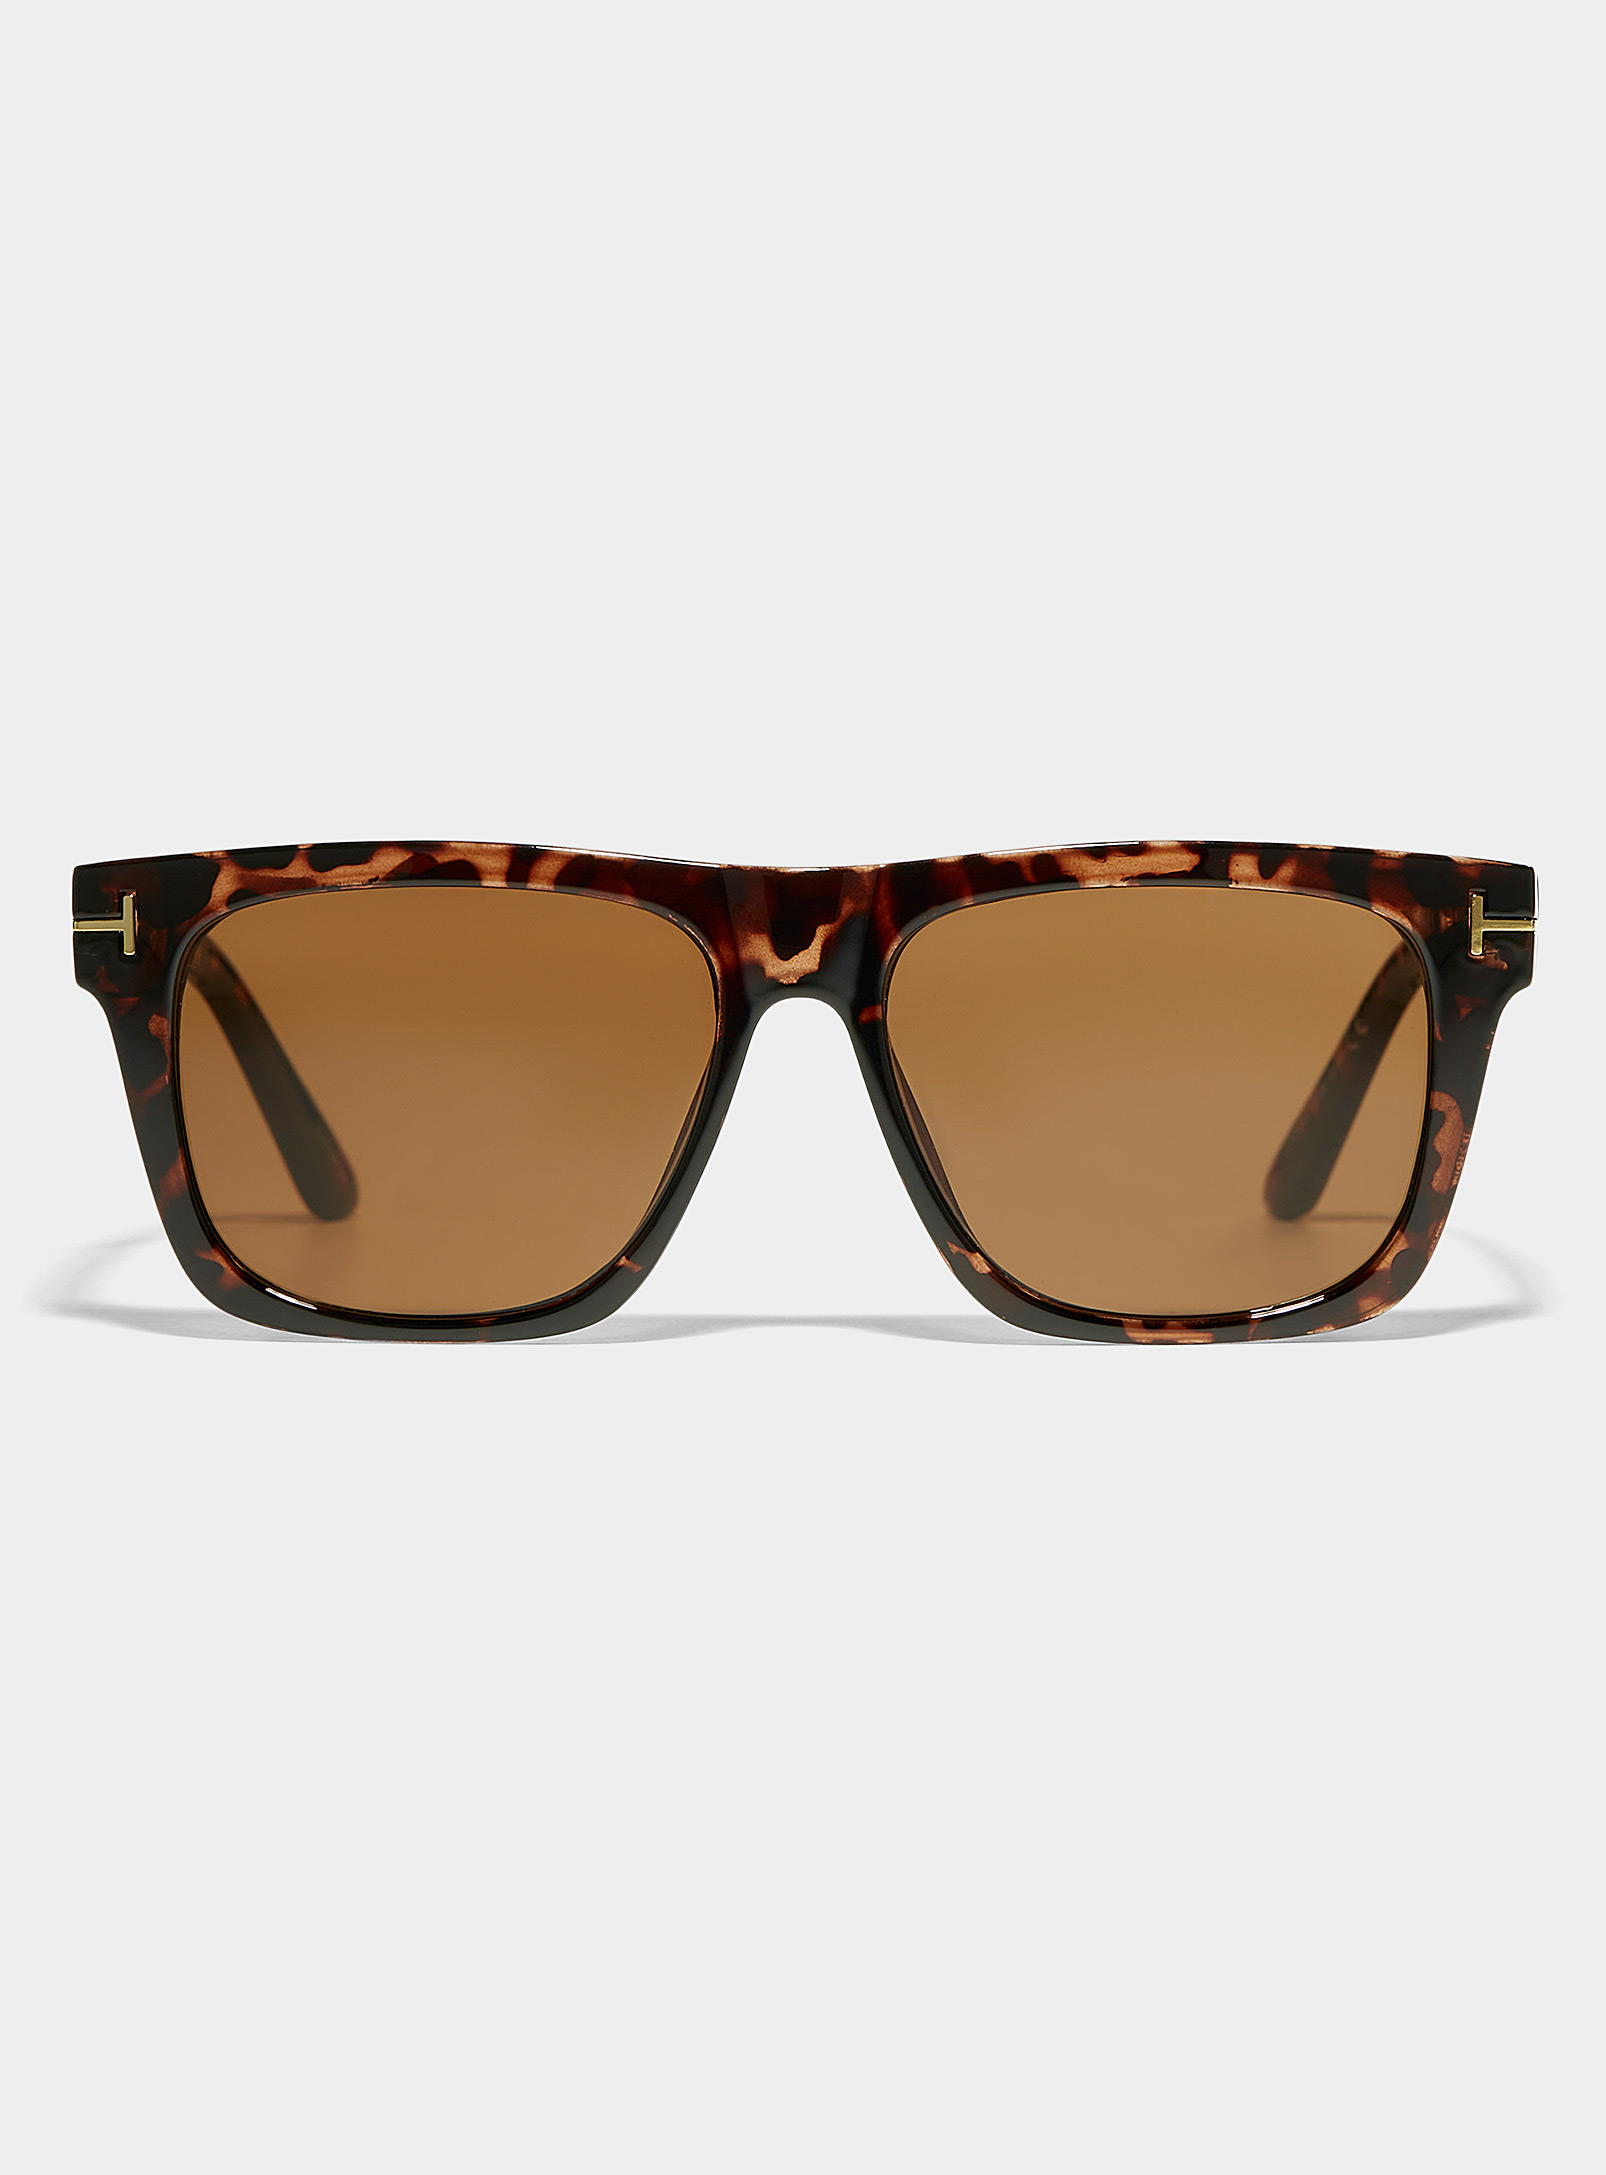 Le 31 - Men's Marlow square sunglasses